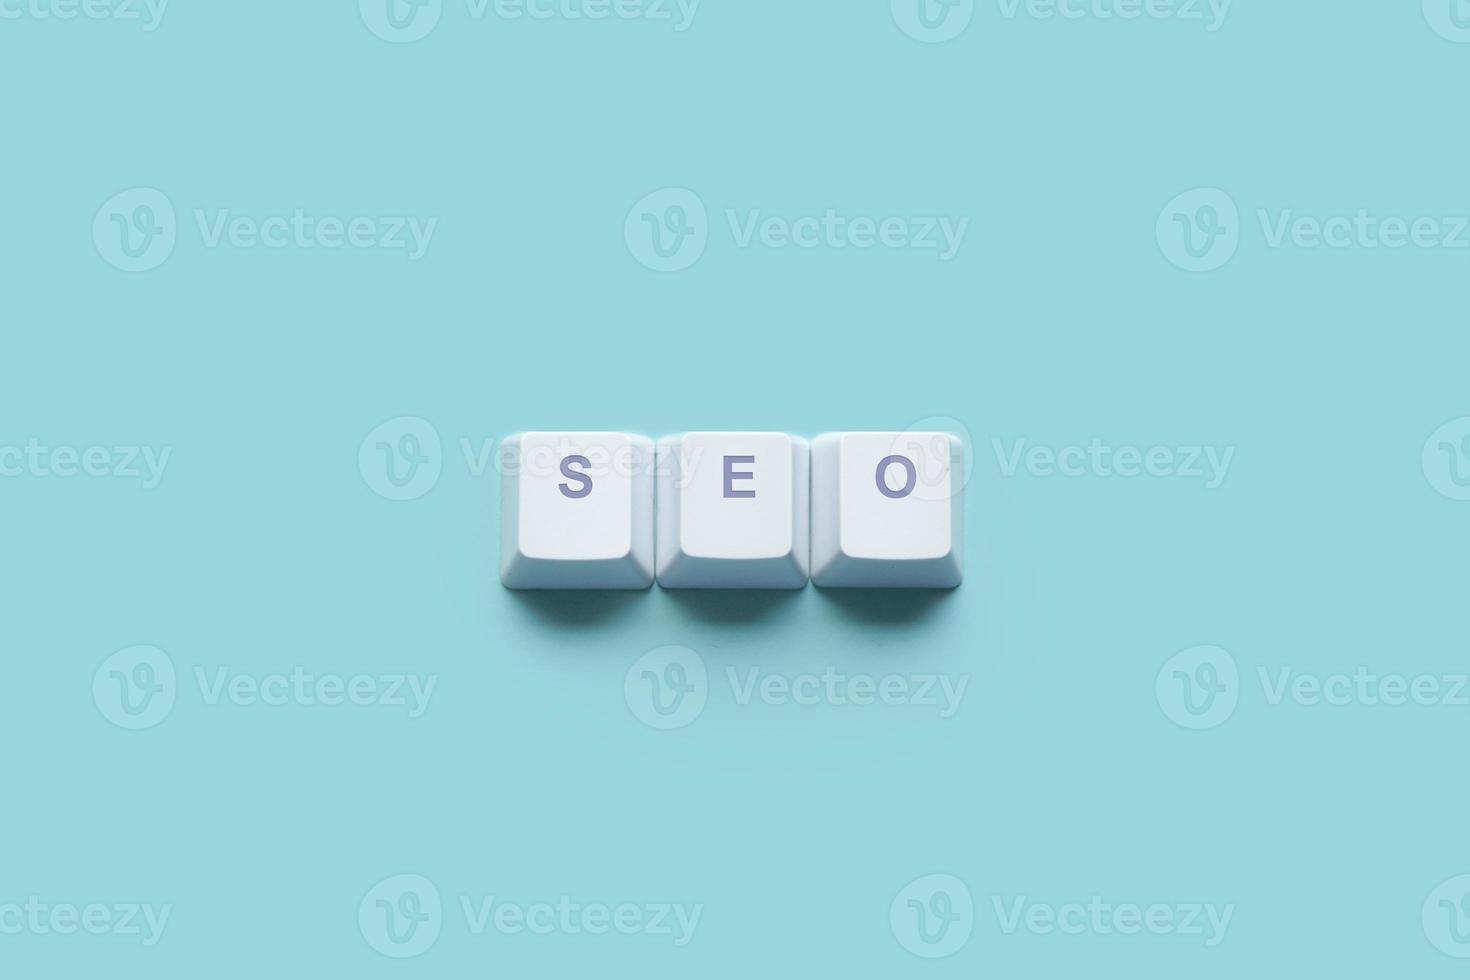 Word Search Engine Optimization SEO written on computer keyboard keys photo